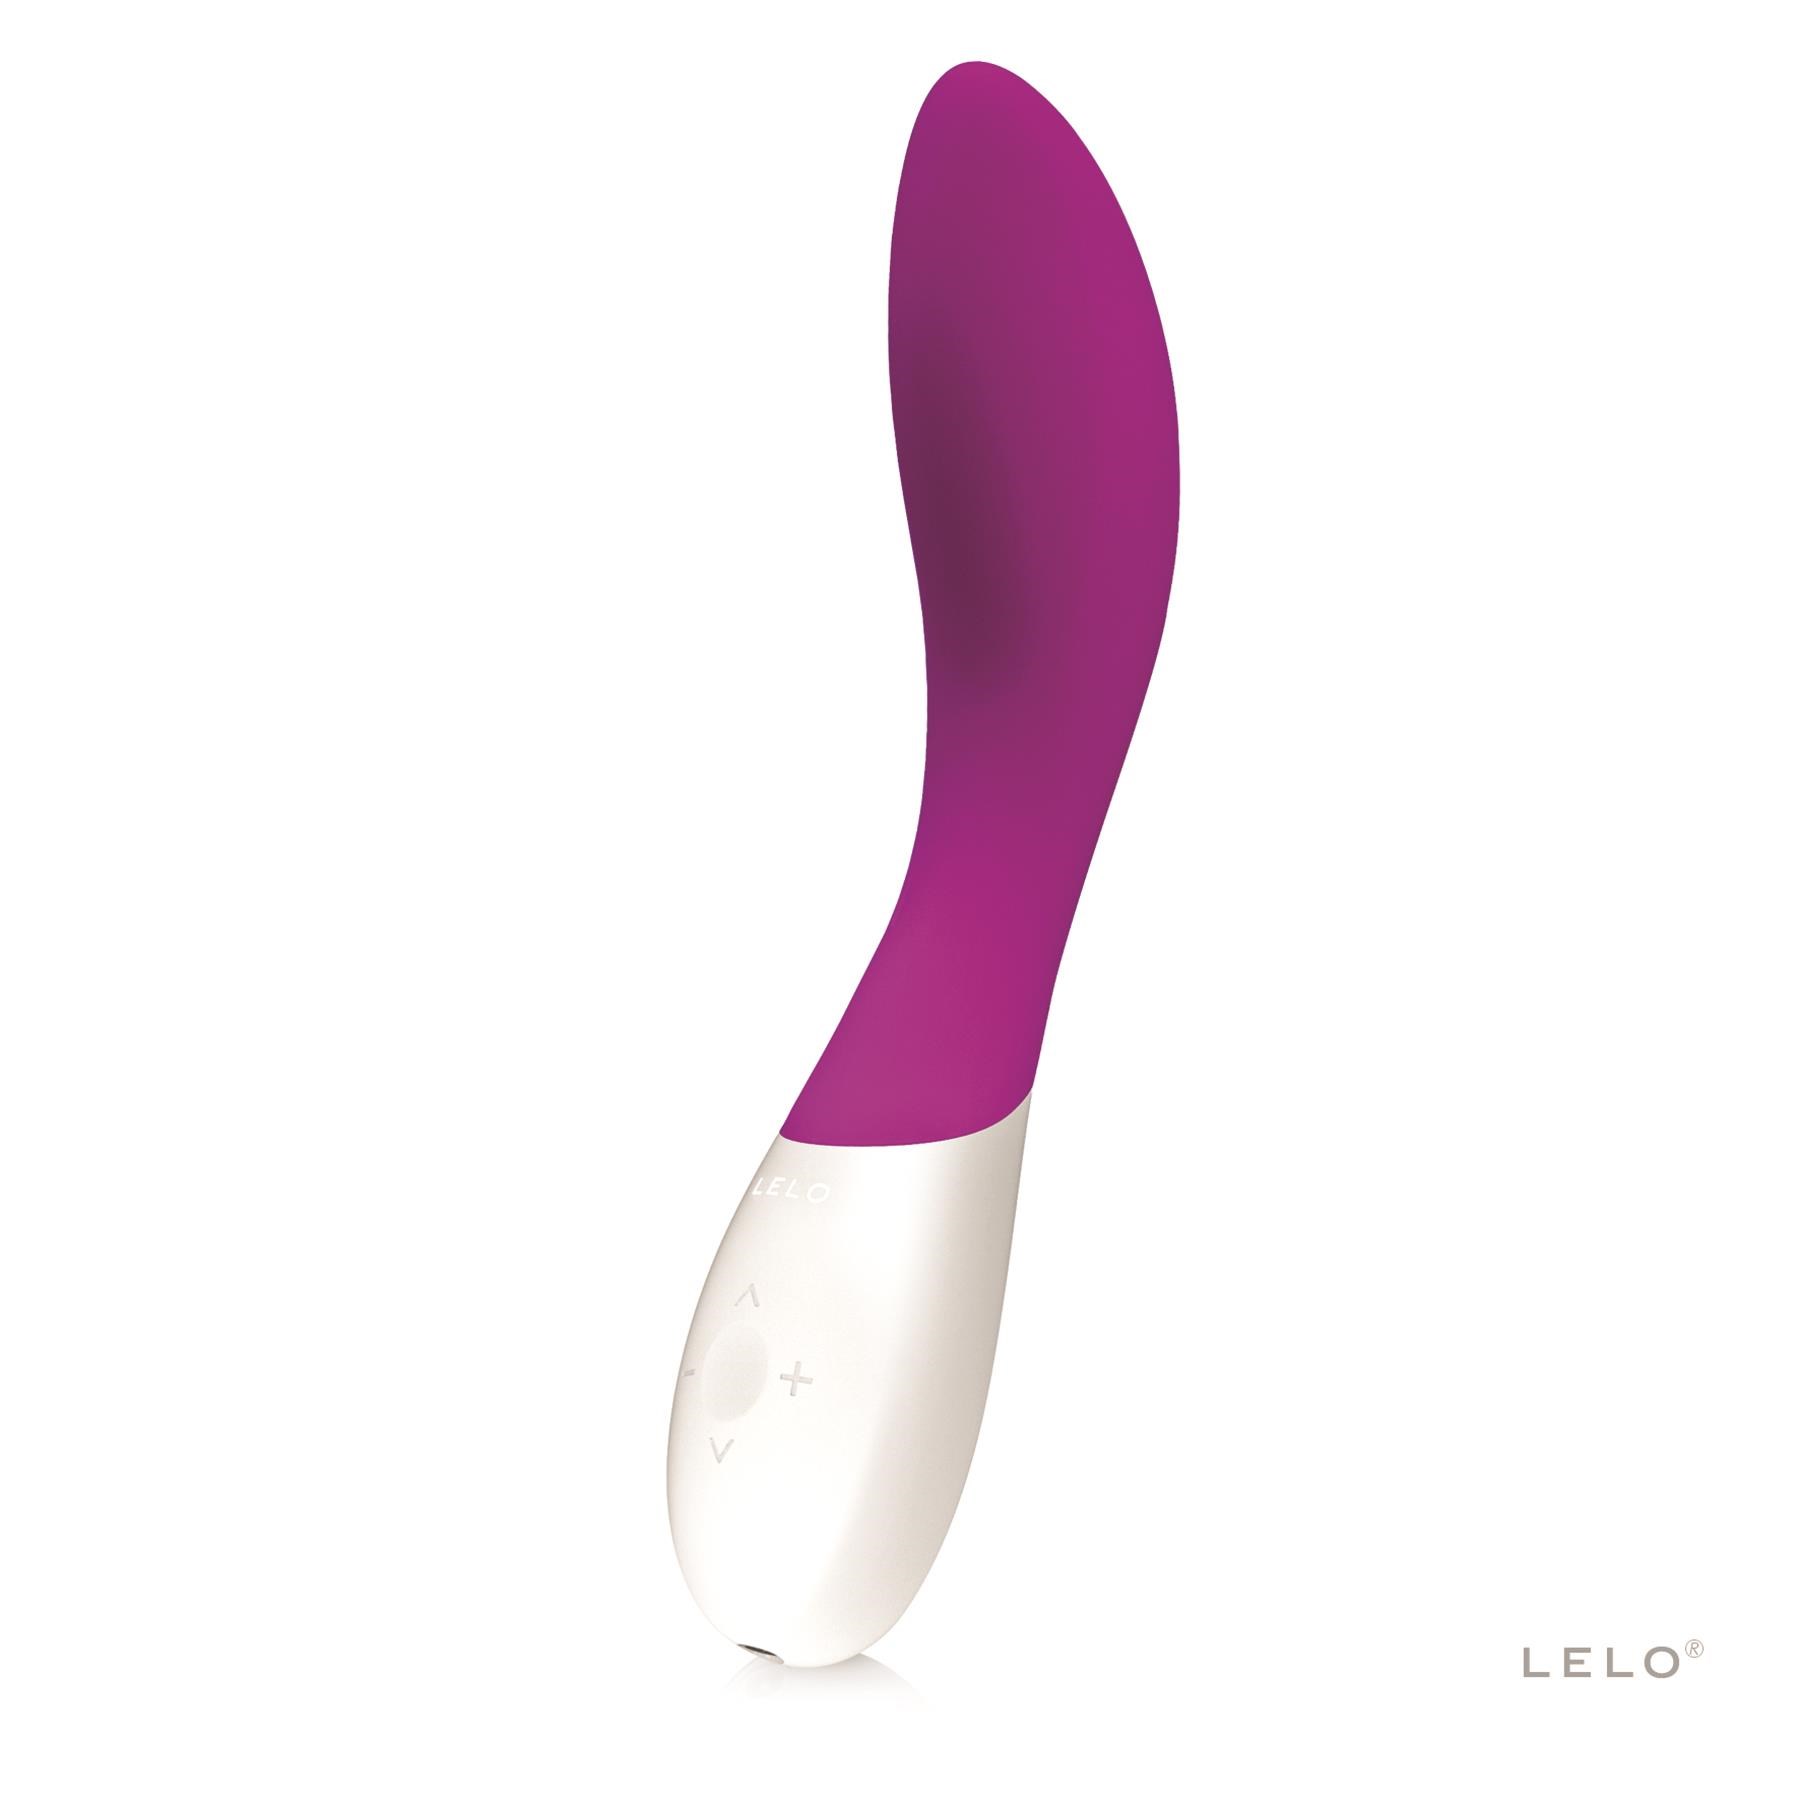 Lelo Mona Wave G-Spot Massager Upright Product Shot